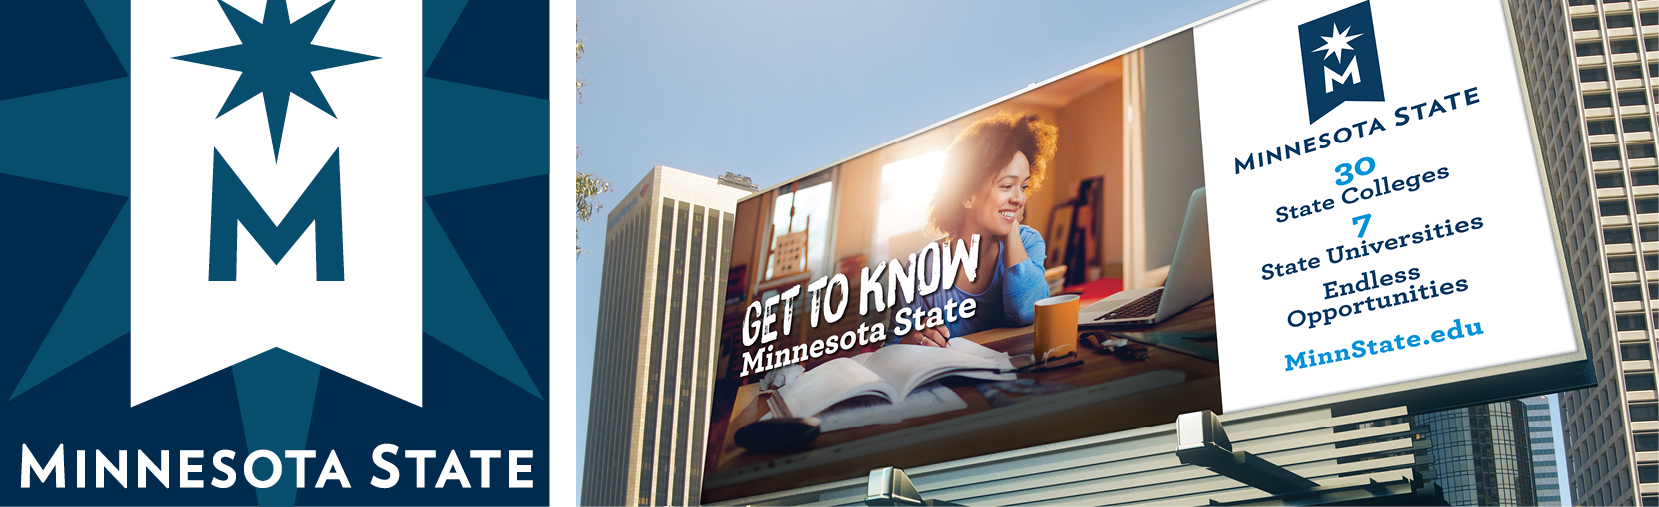 Minnesota State outdoor advertising